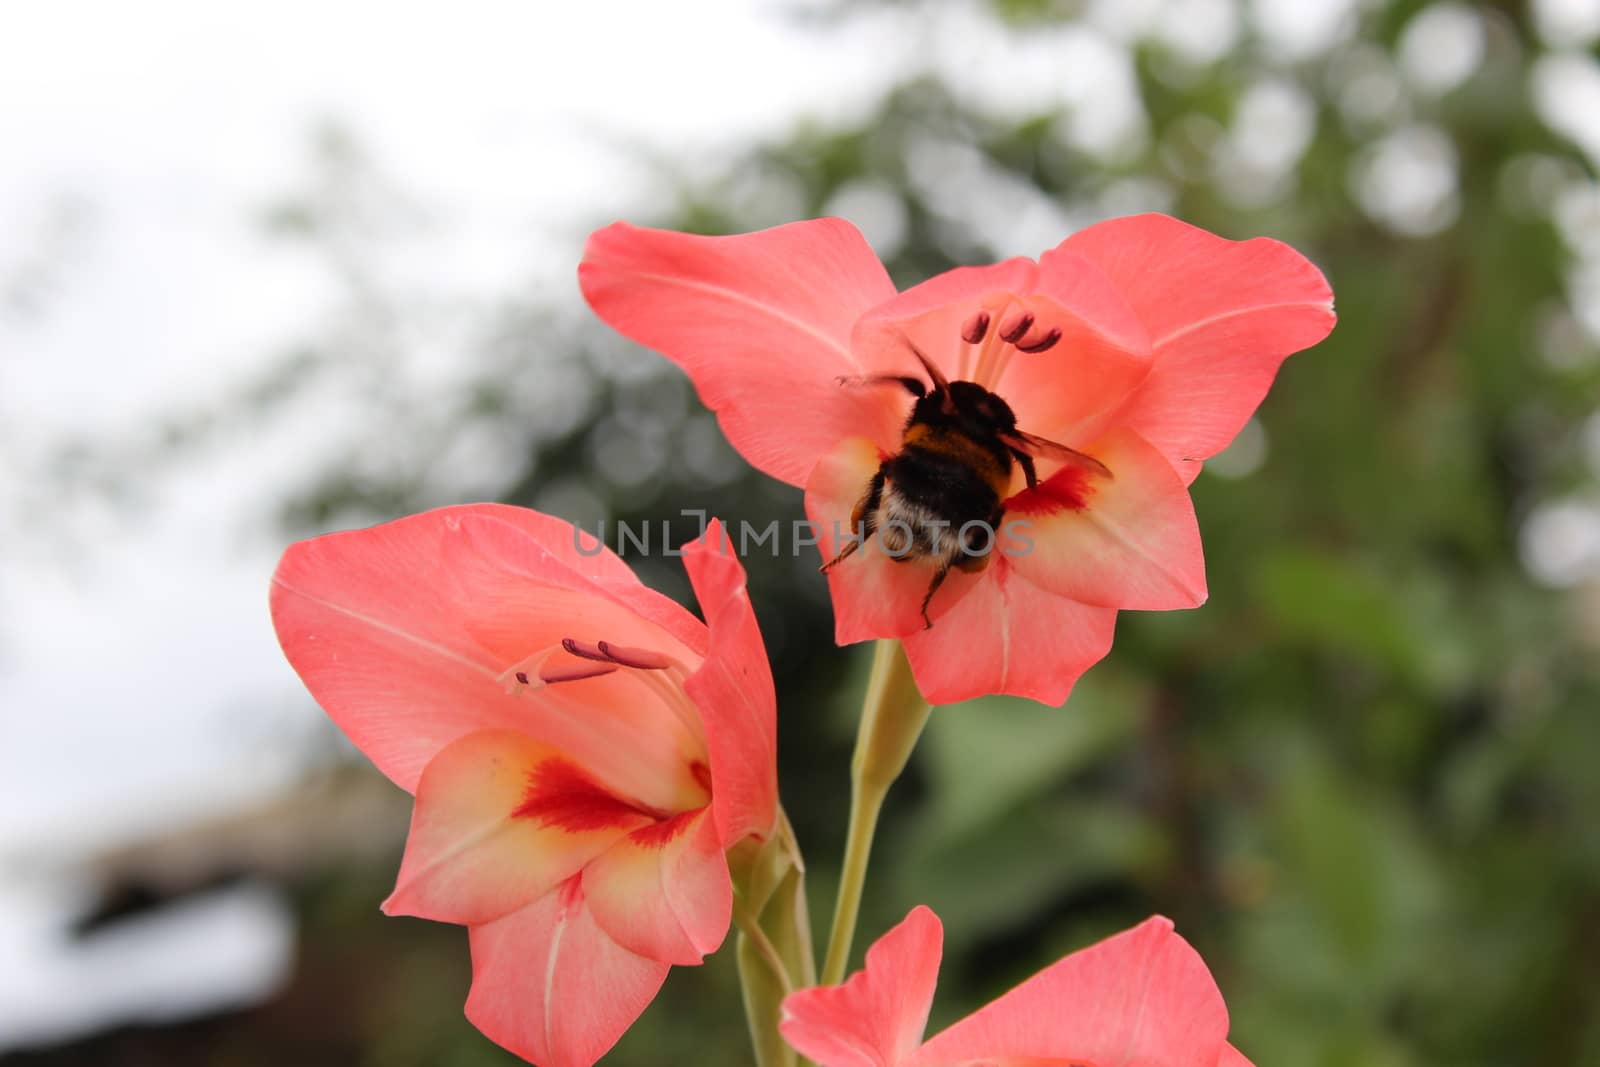 bumblebee flying near flower of gladiolus by alexmak